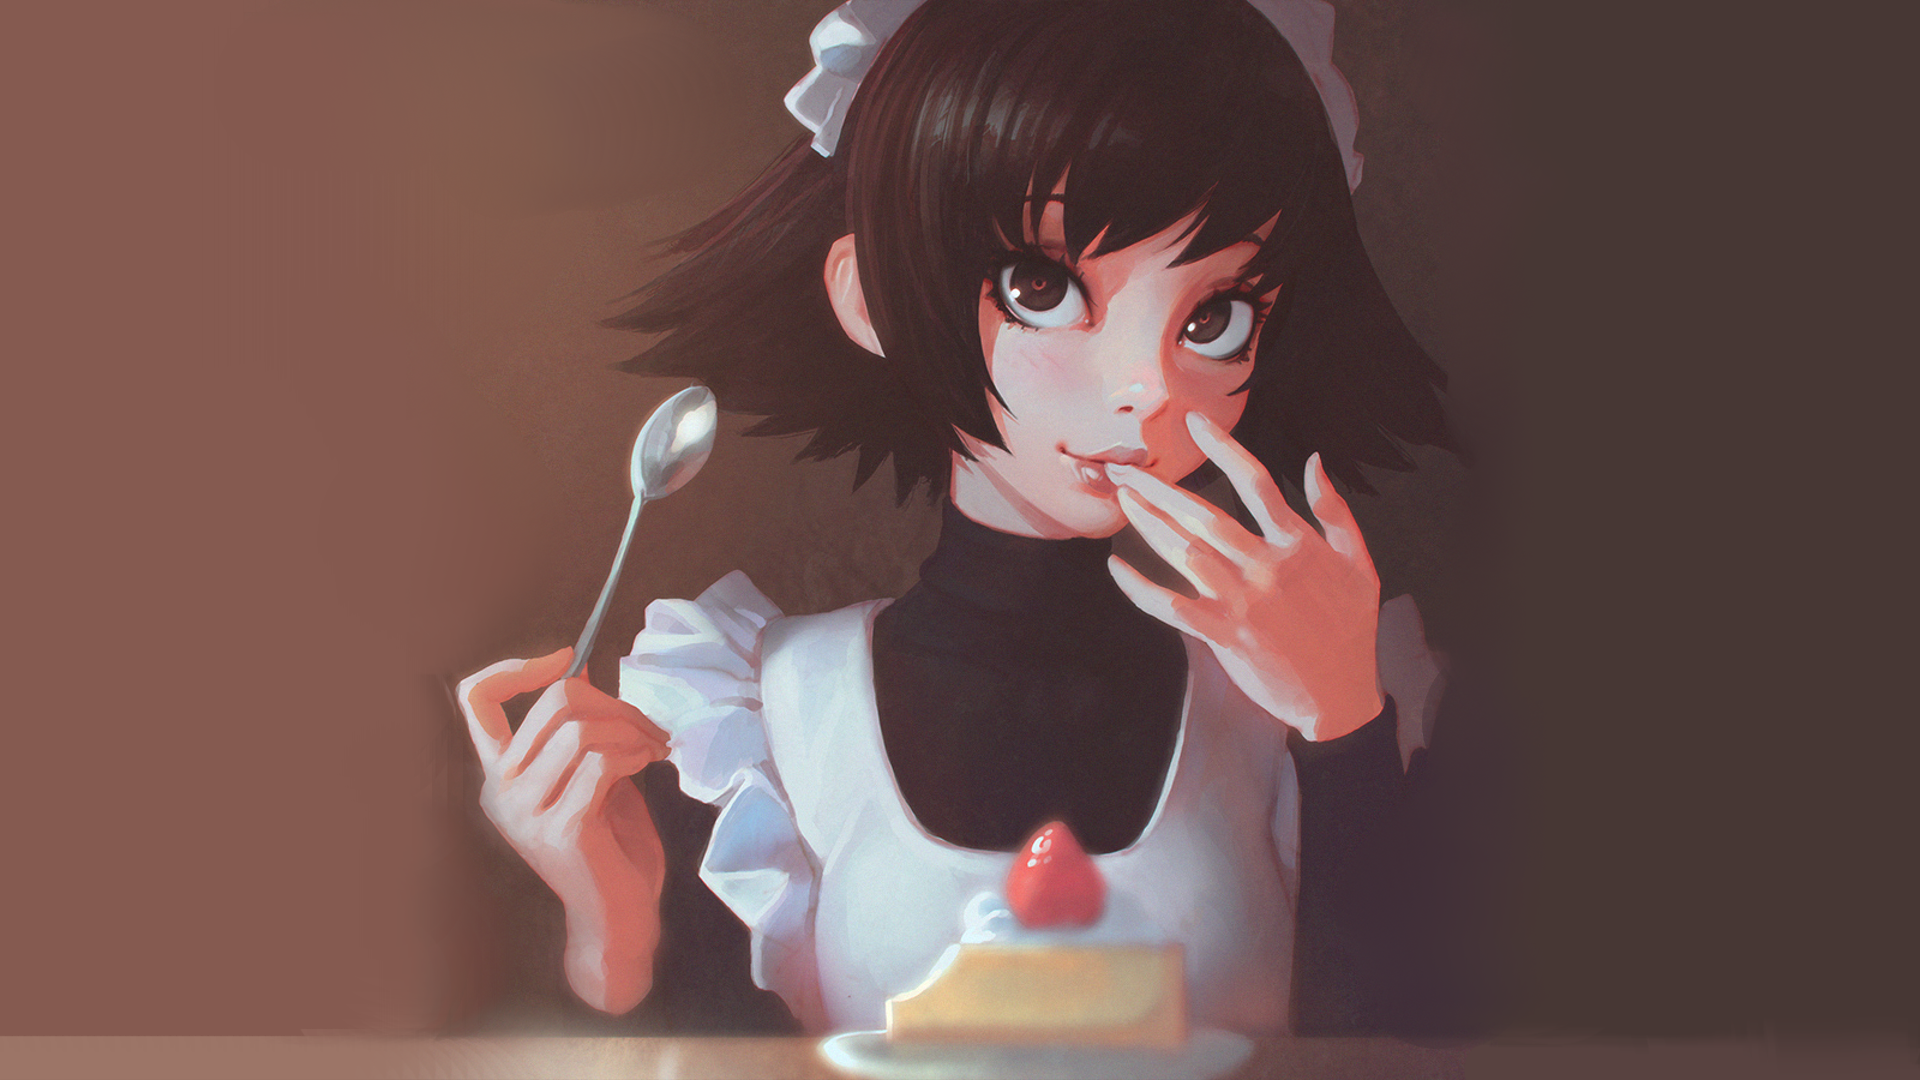 Anime 1920x1080 digital art fantasy art artwork original characters women maid outfit cake